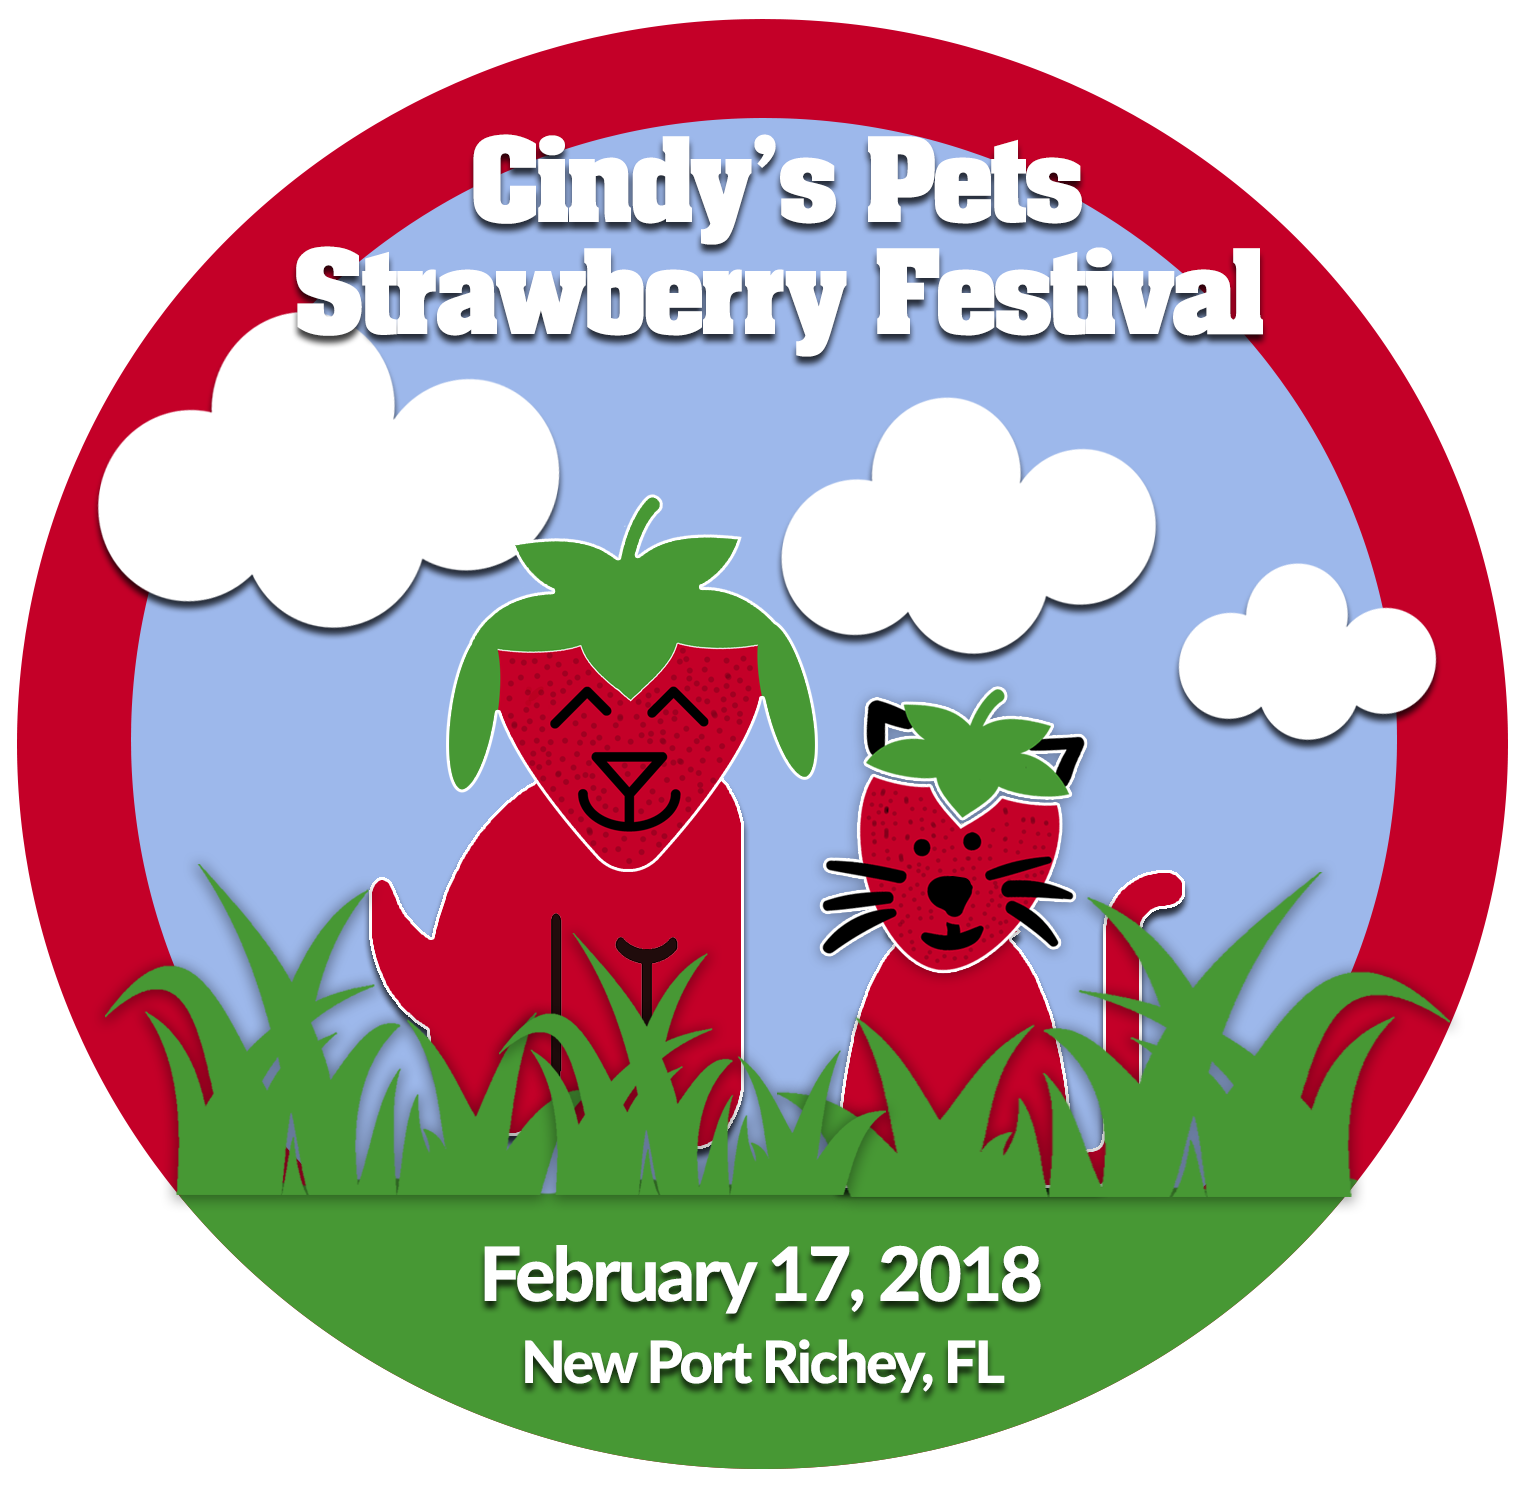 2018 Cindy’s Pets Strawberry Festival